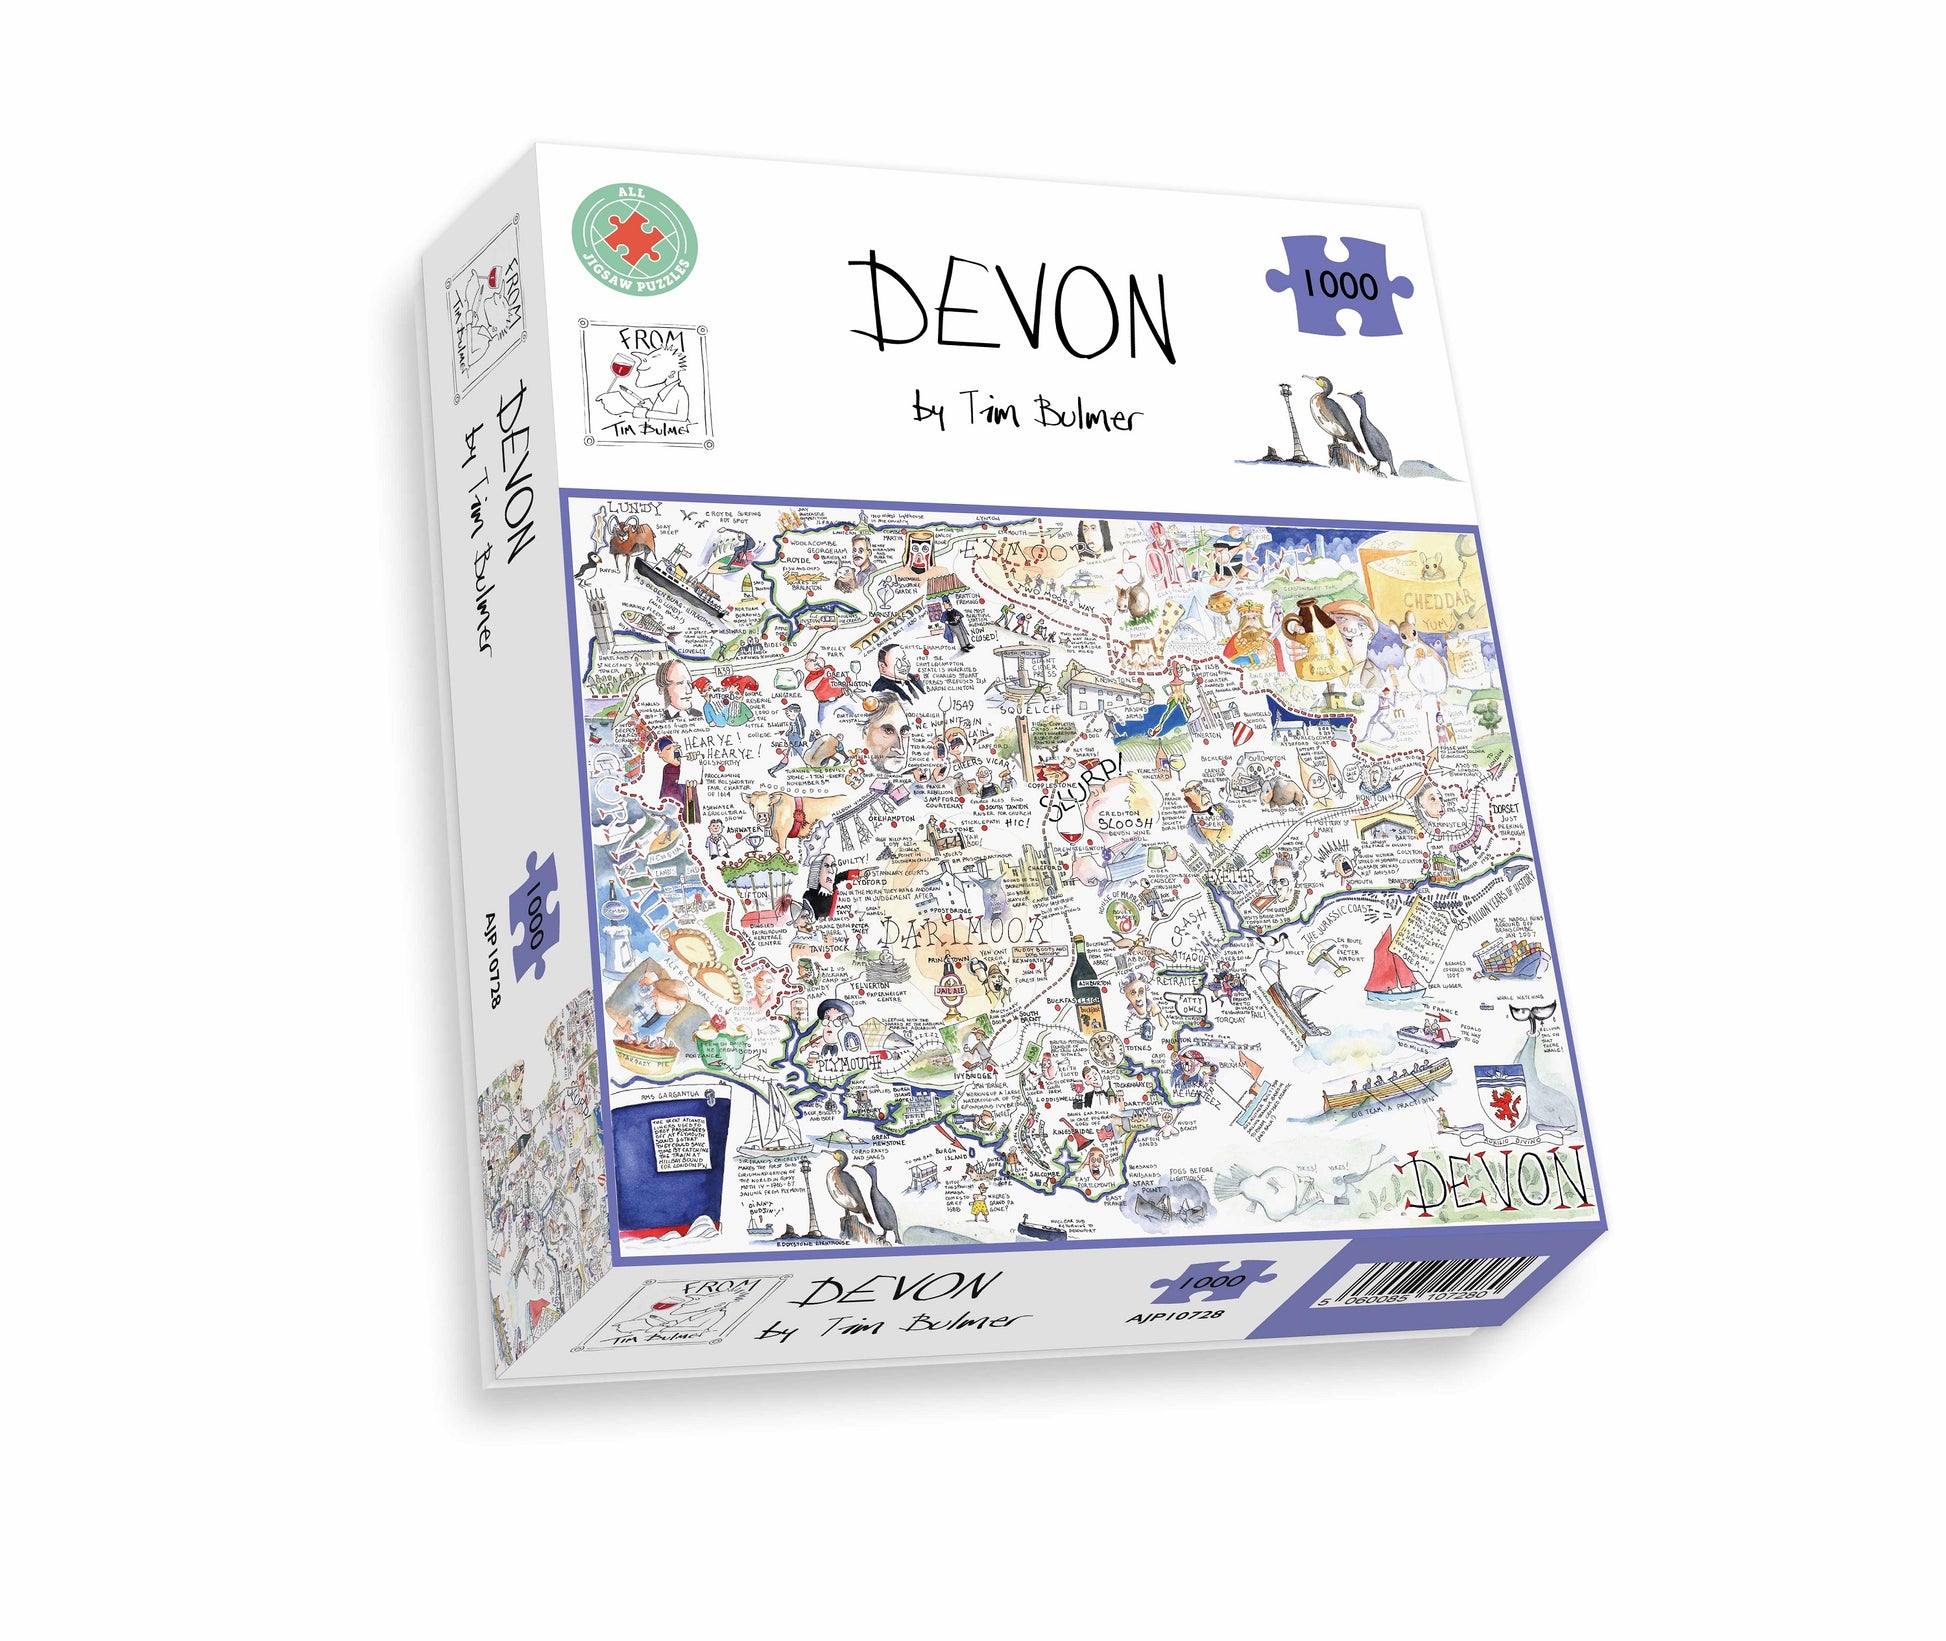 Devon - Tim Bulmer 1000 piece Jigsaw box